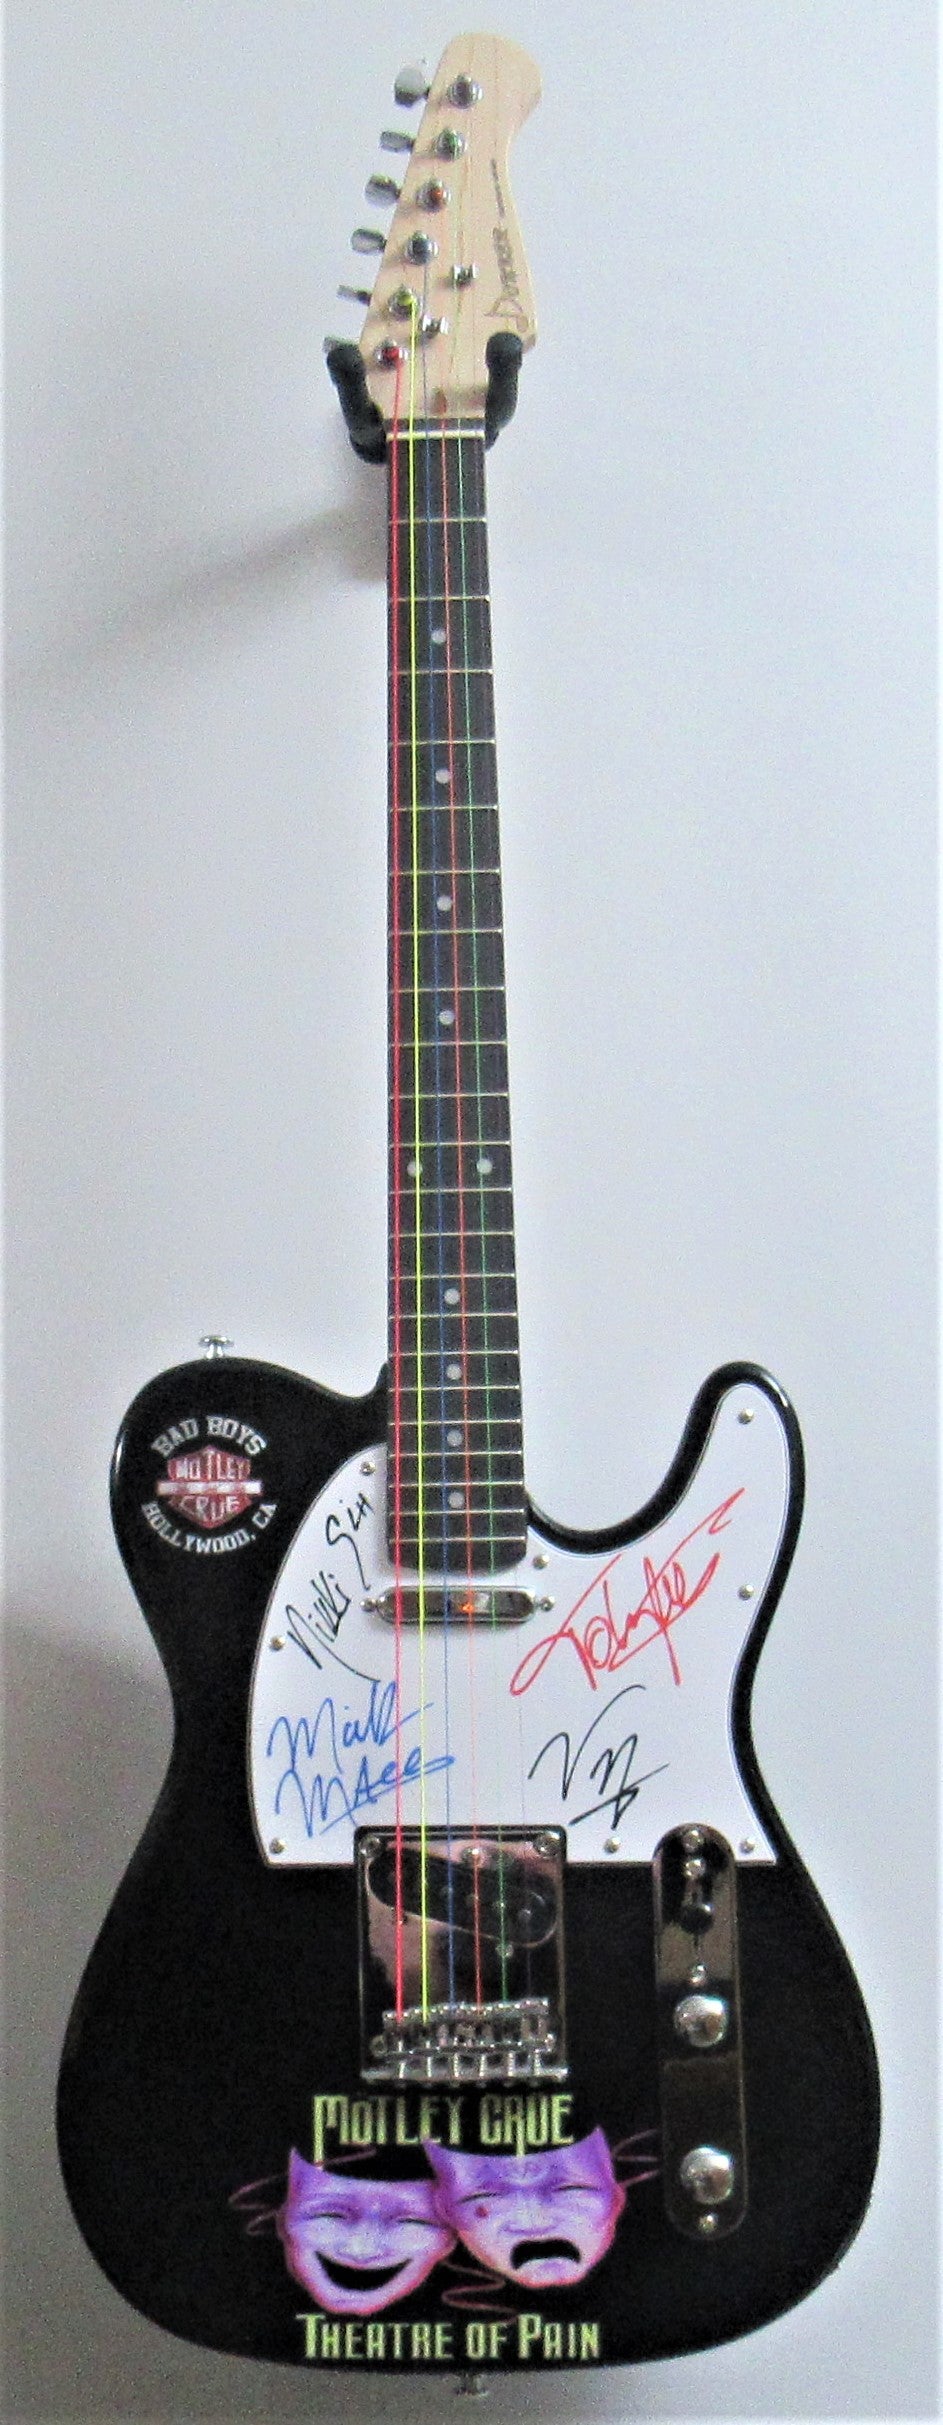 Motley Crue Autographed Guitar | Zion Graphic Collectibles